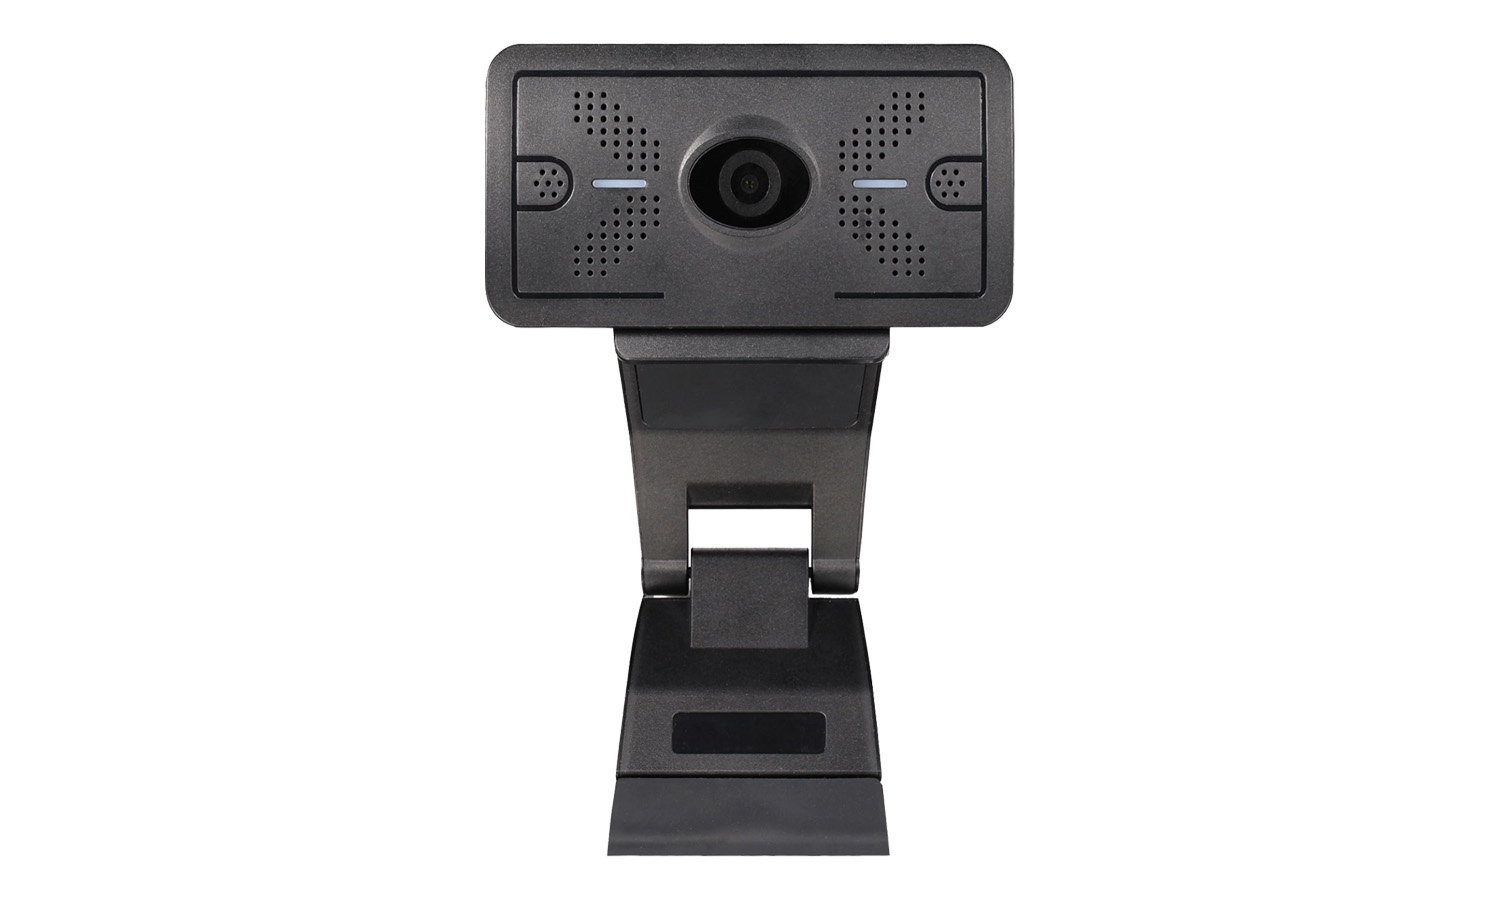 BZBGEAR BG-BWEB-S Full HD 1080p USB Web Camera with 2.9mm lens